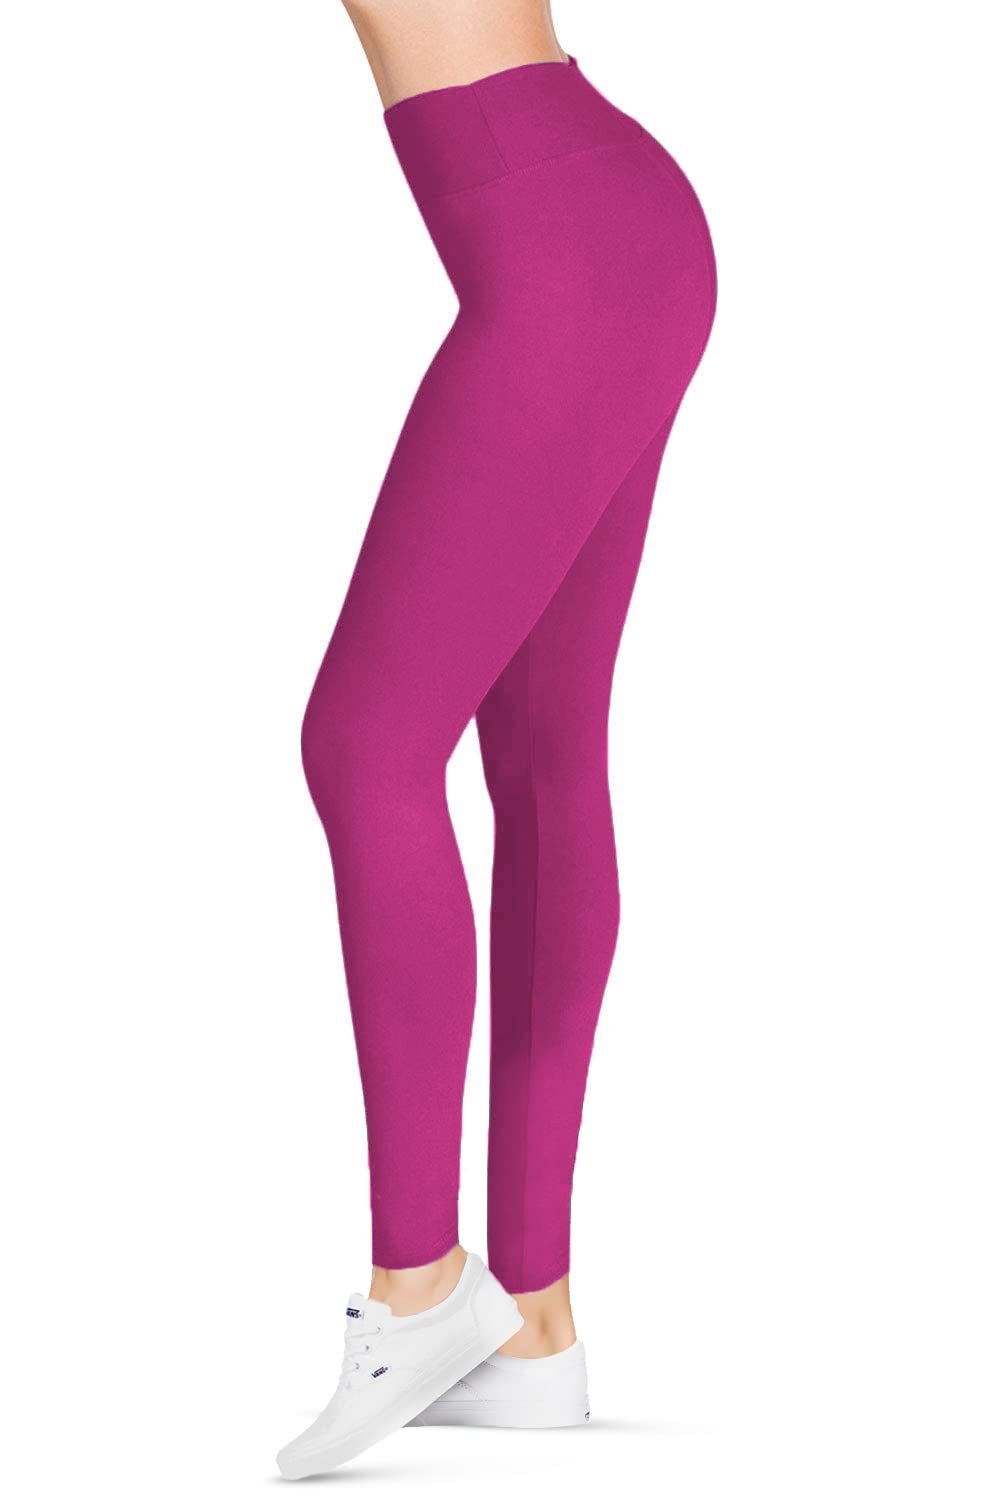 Free Shipping SATINA High Waisted Fuchsia Leggings | Yoga Workout Regular & Plus | 3 Waistband | One Size